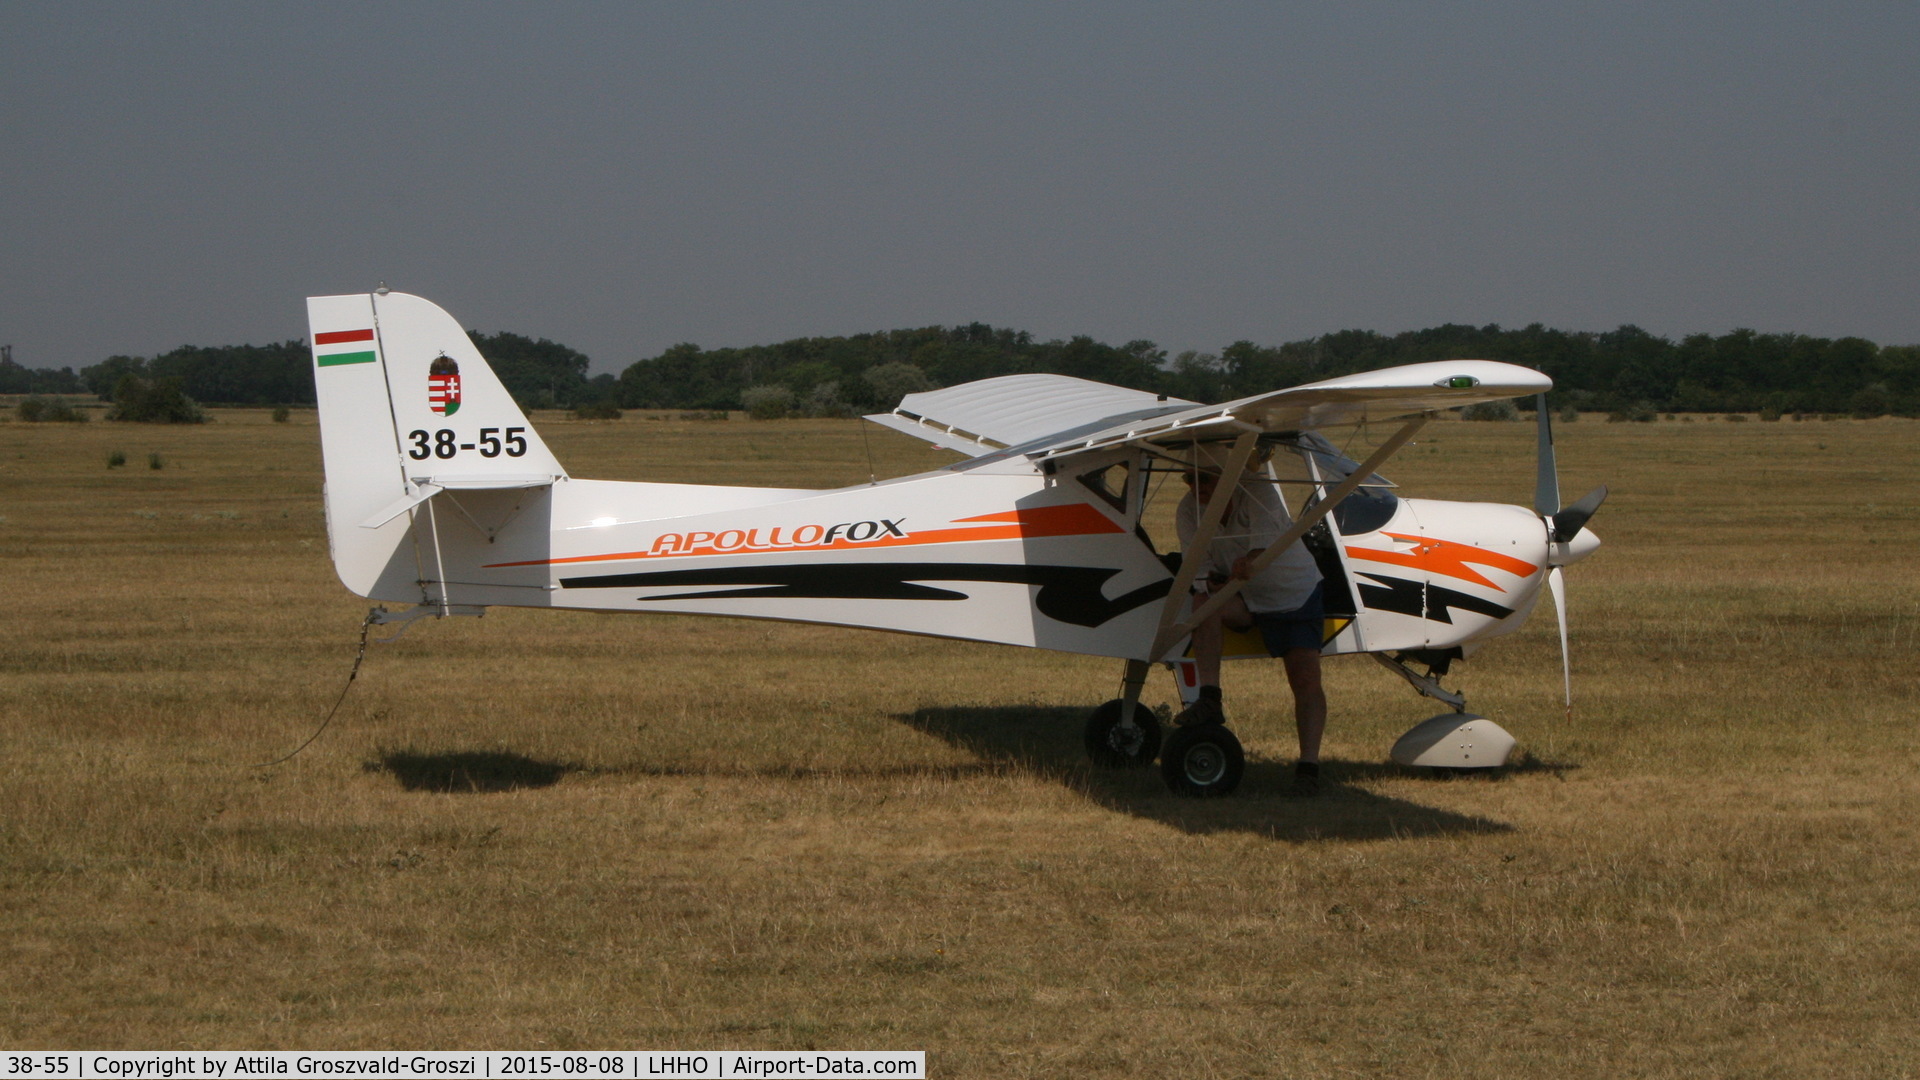 38-55, 2009 Halley Apollo Fox C/N 080509, Hajdúszoboszló Airport, Hungary - 60. Hungary Gliding National Championship and third Civis Thermal Cup, 2015